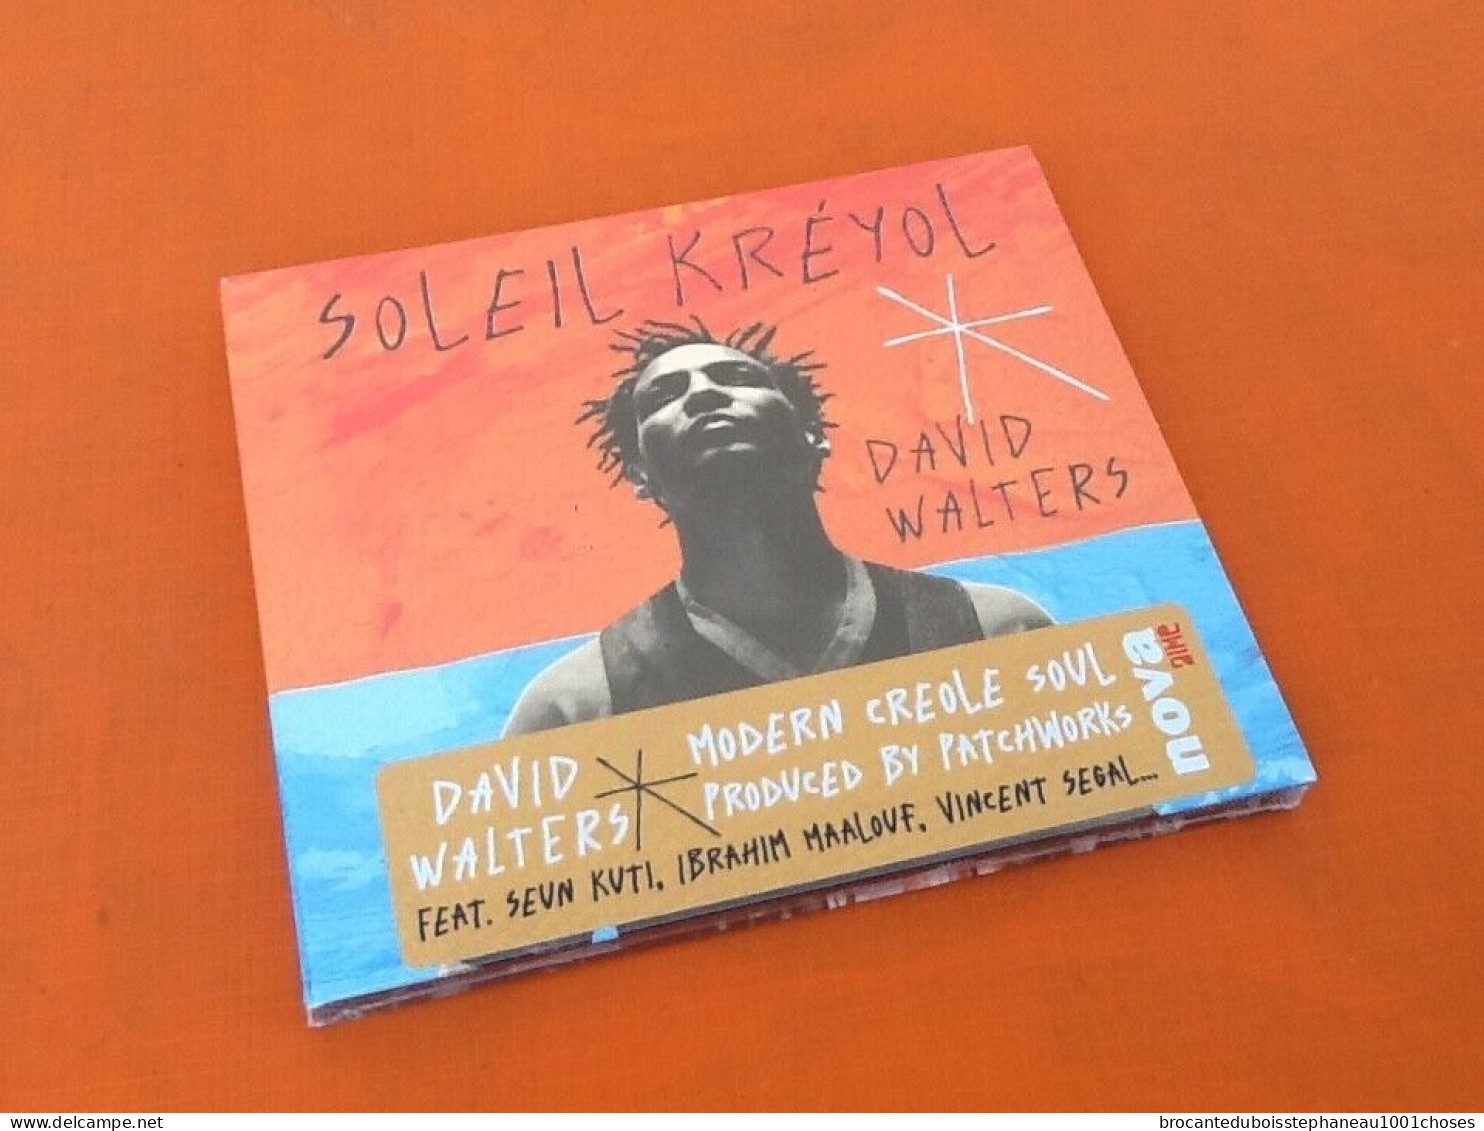 Album CD  David Walters Soleil Kréyol Avec Ibrahim Maalouf... - Soul - R&B